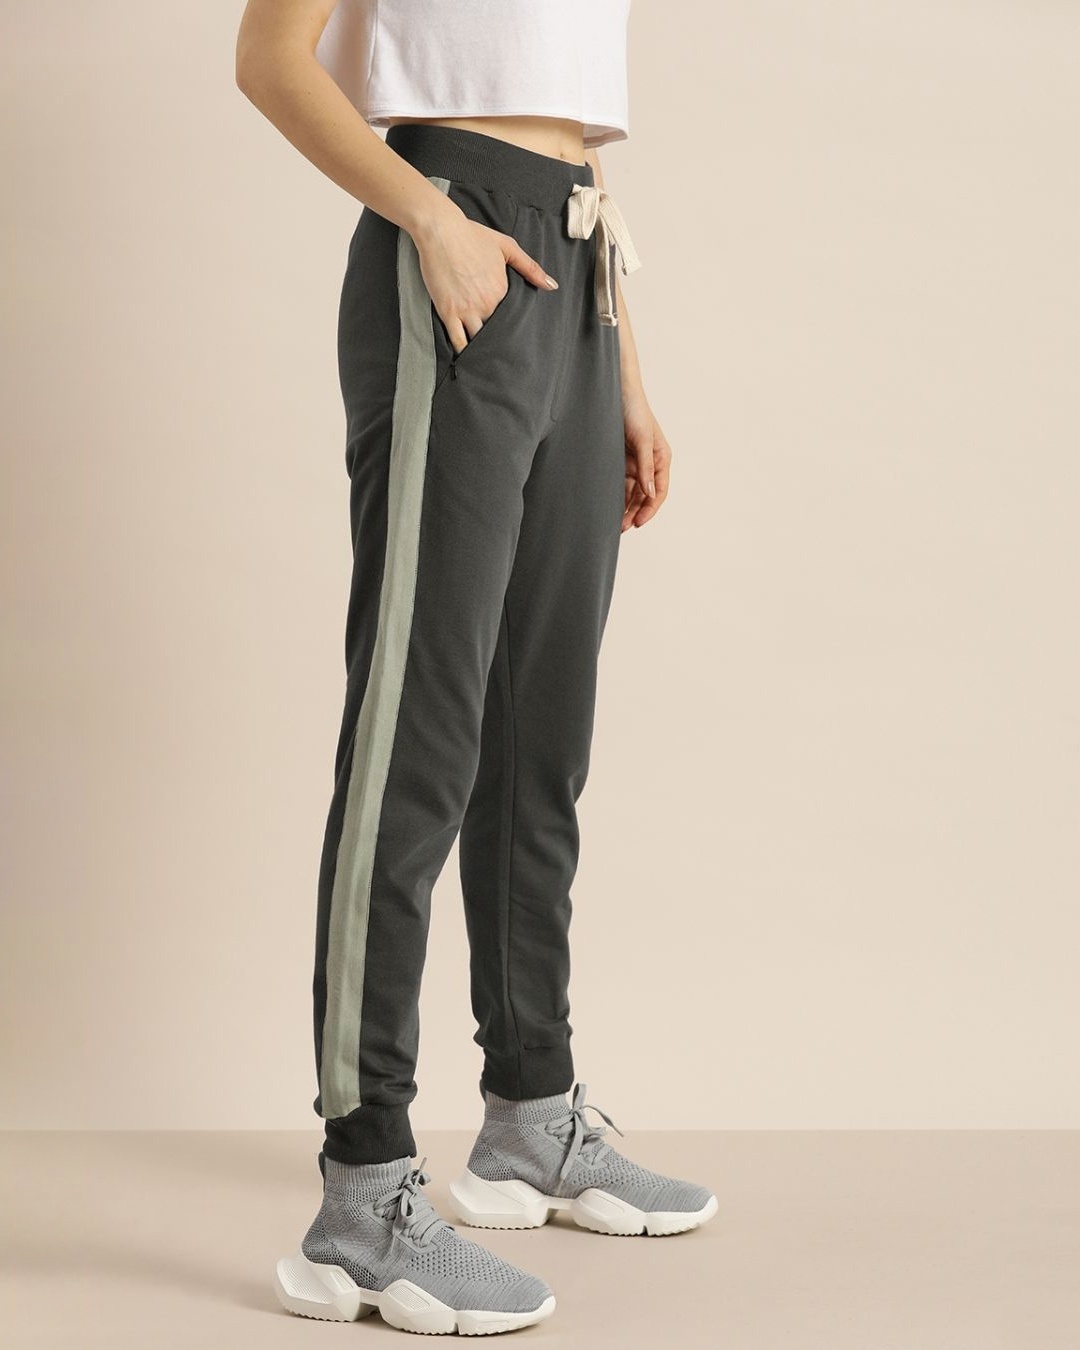 Shop Women's Grey Solid Joggers-Design